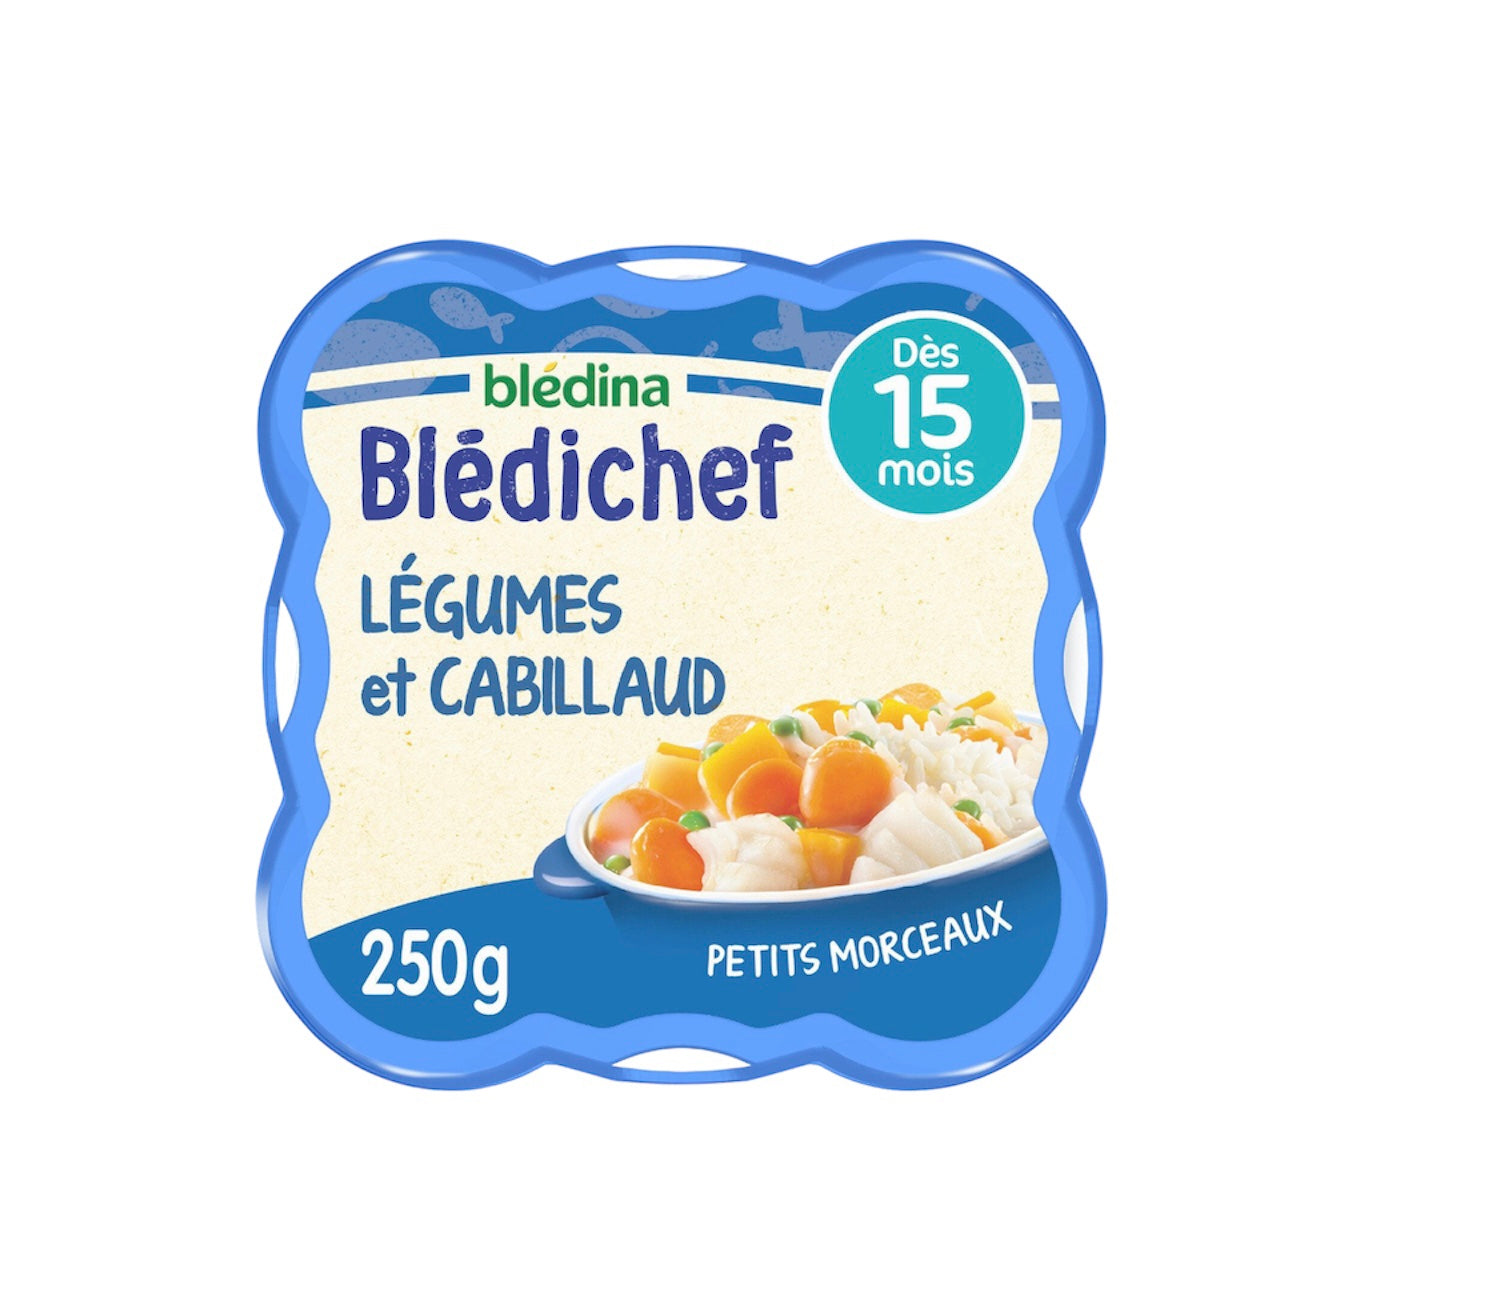 EURO MARKET  bledina plat bebe des 15 mois mijote de legumes fondants et  cabillaud bledichef 250g – Euro-Market